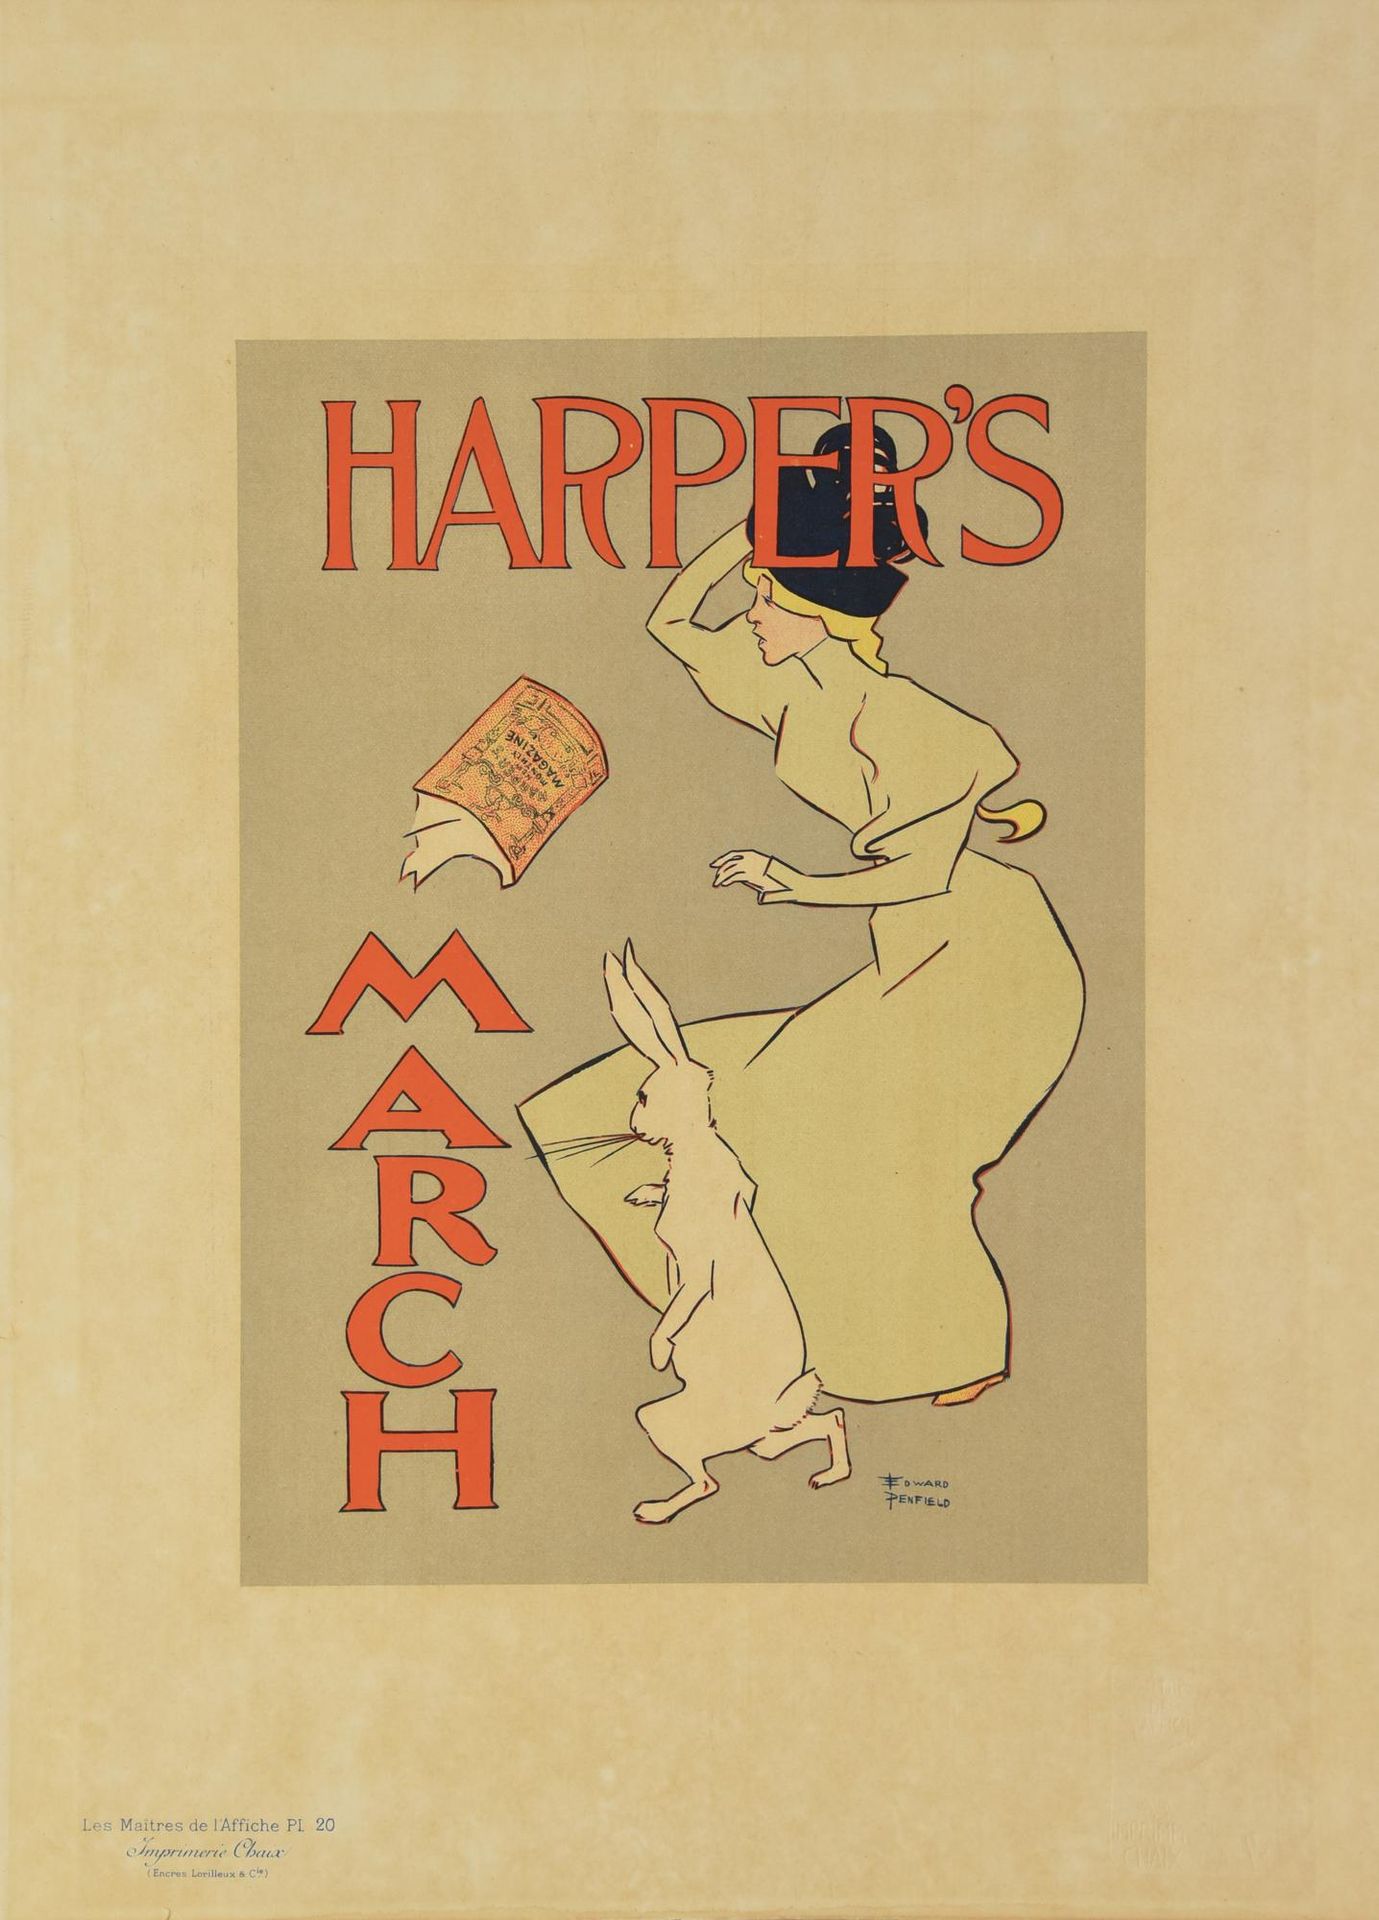 HARPER'S MARCH HARPER'S MARCH

Lithographie, 39,5x29 cm 

geprägter Stempel Impr&hellip;